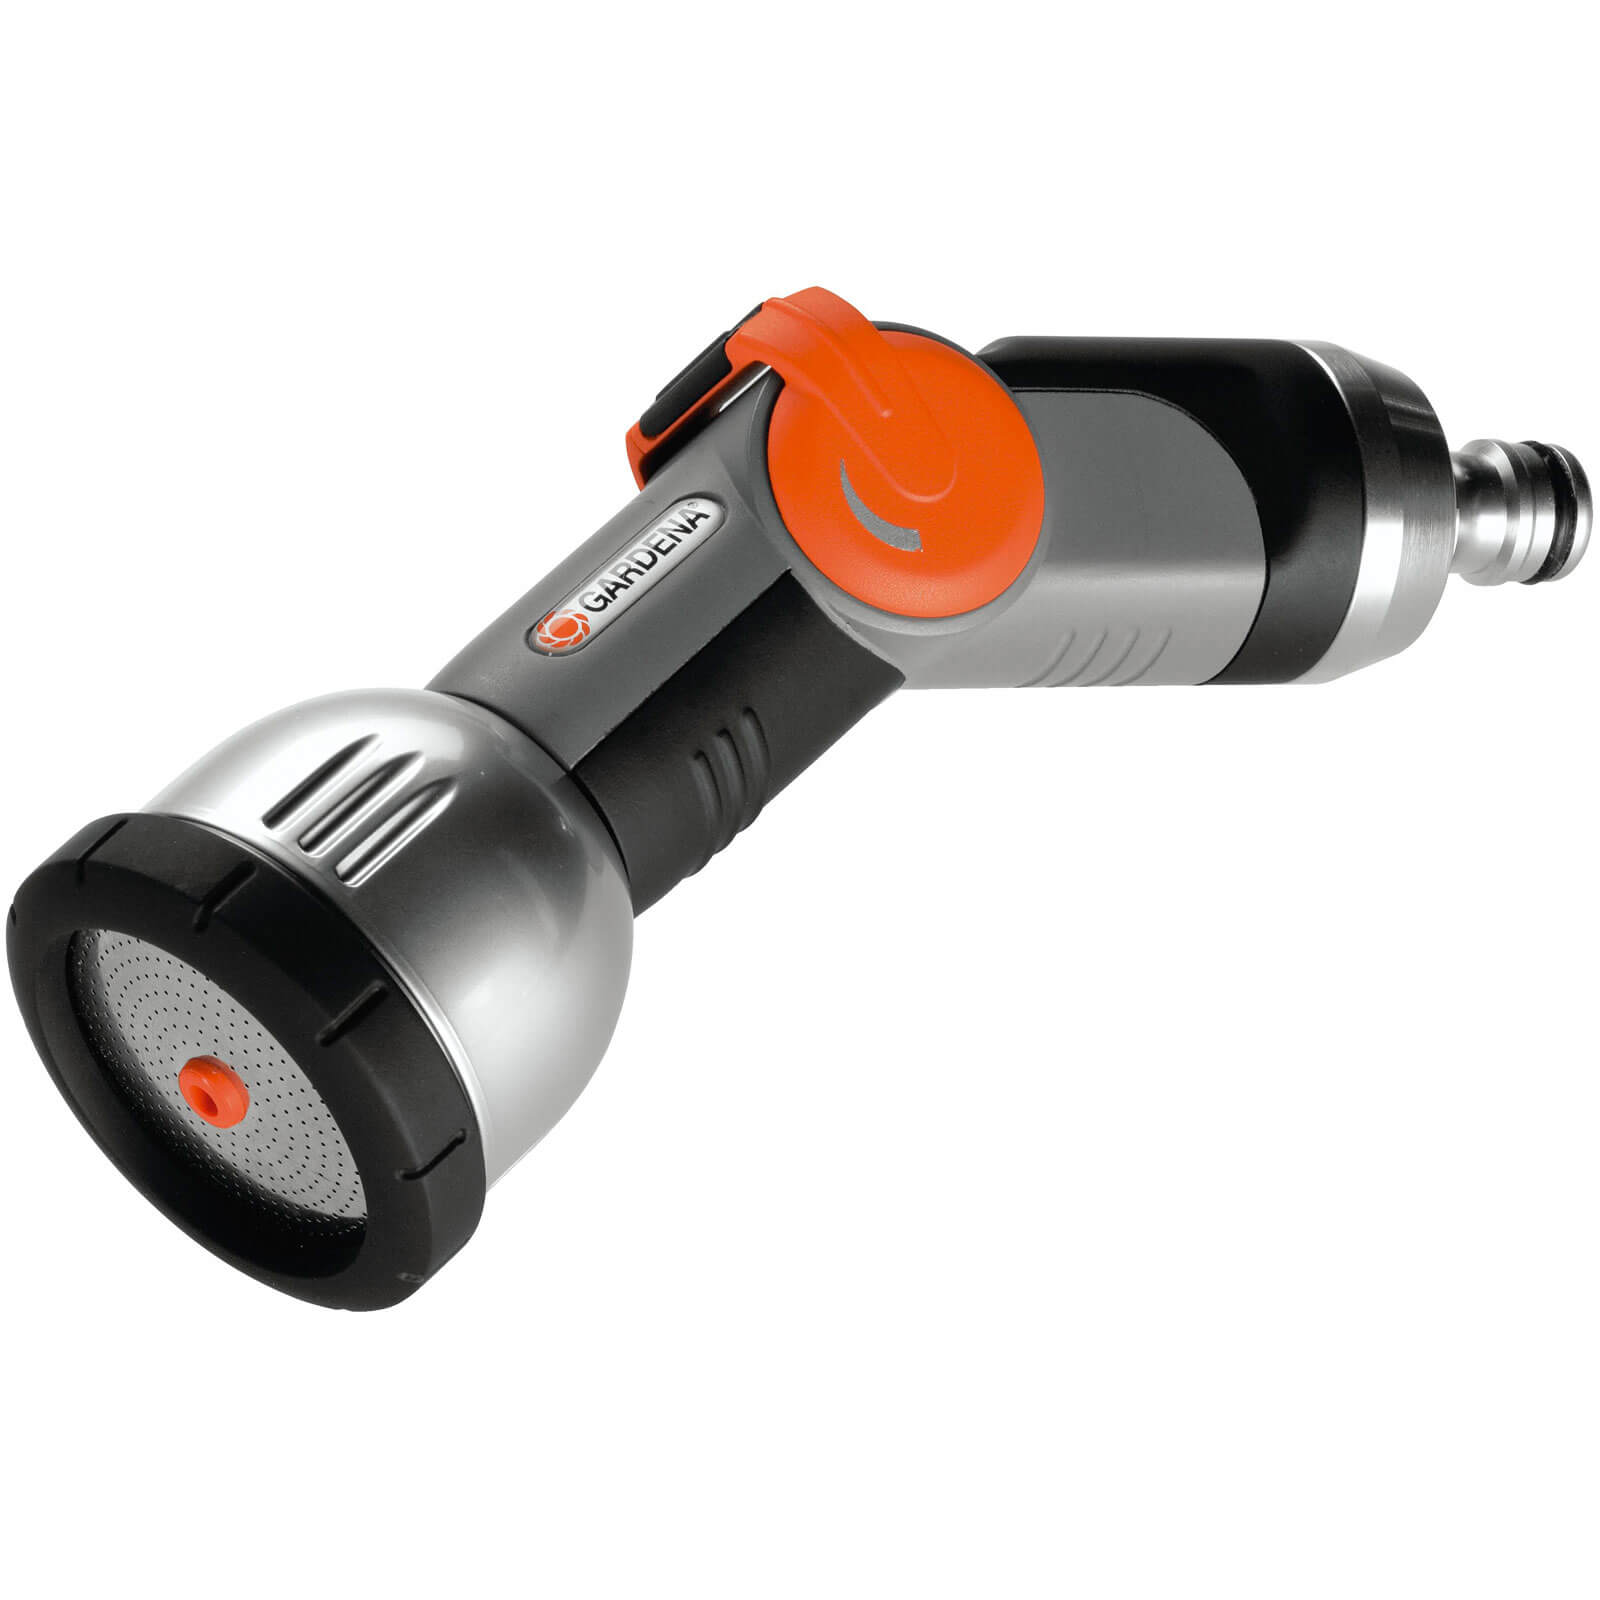 Image of Gardena Premium Metal Adjustable Spray Gun with 3 Spray Patterns for Hose Pipes